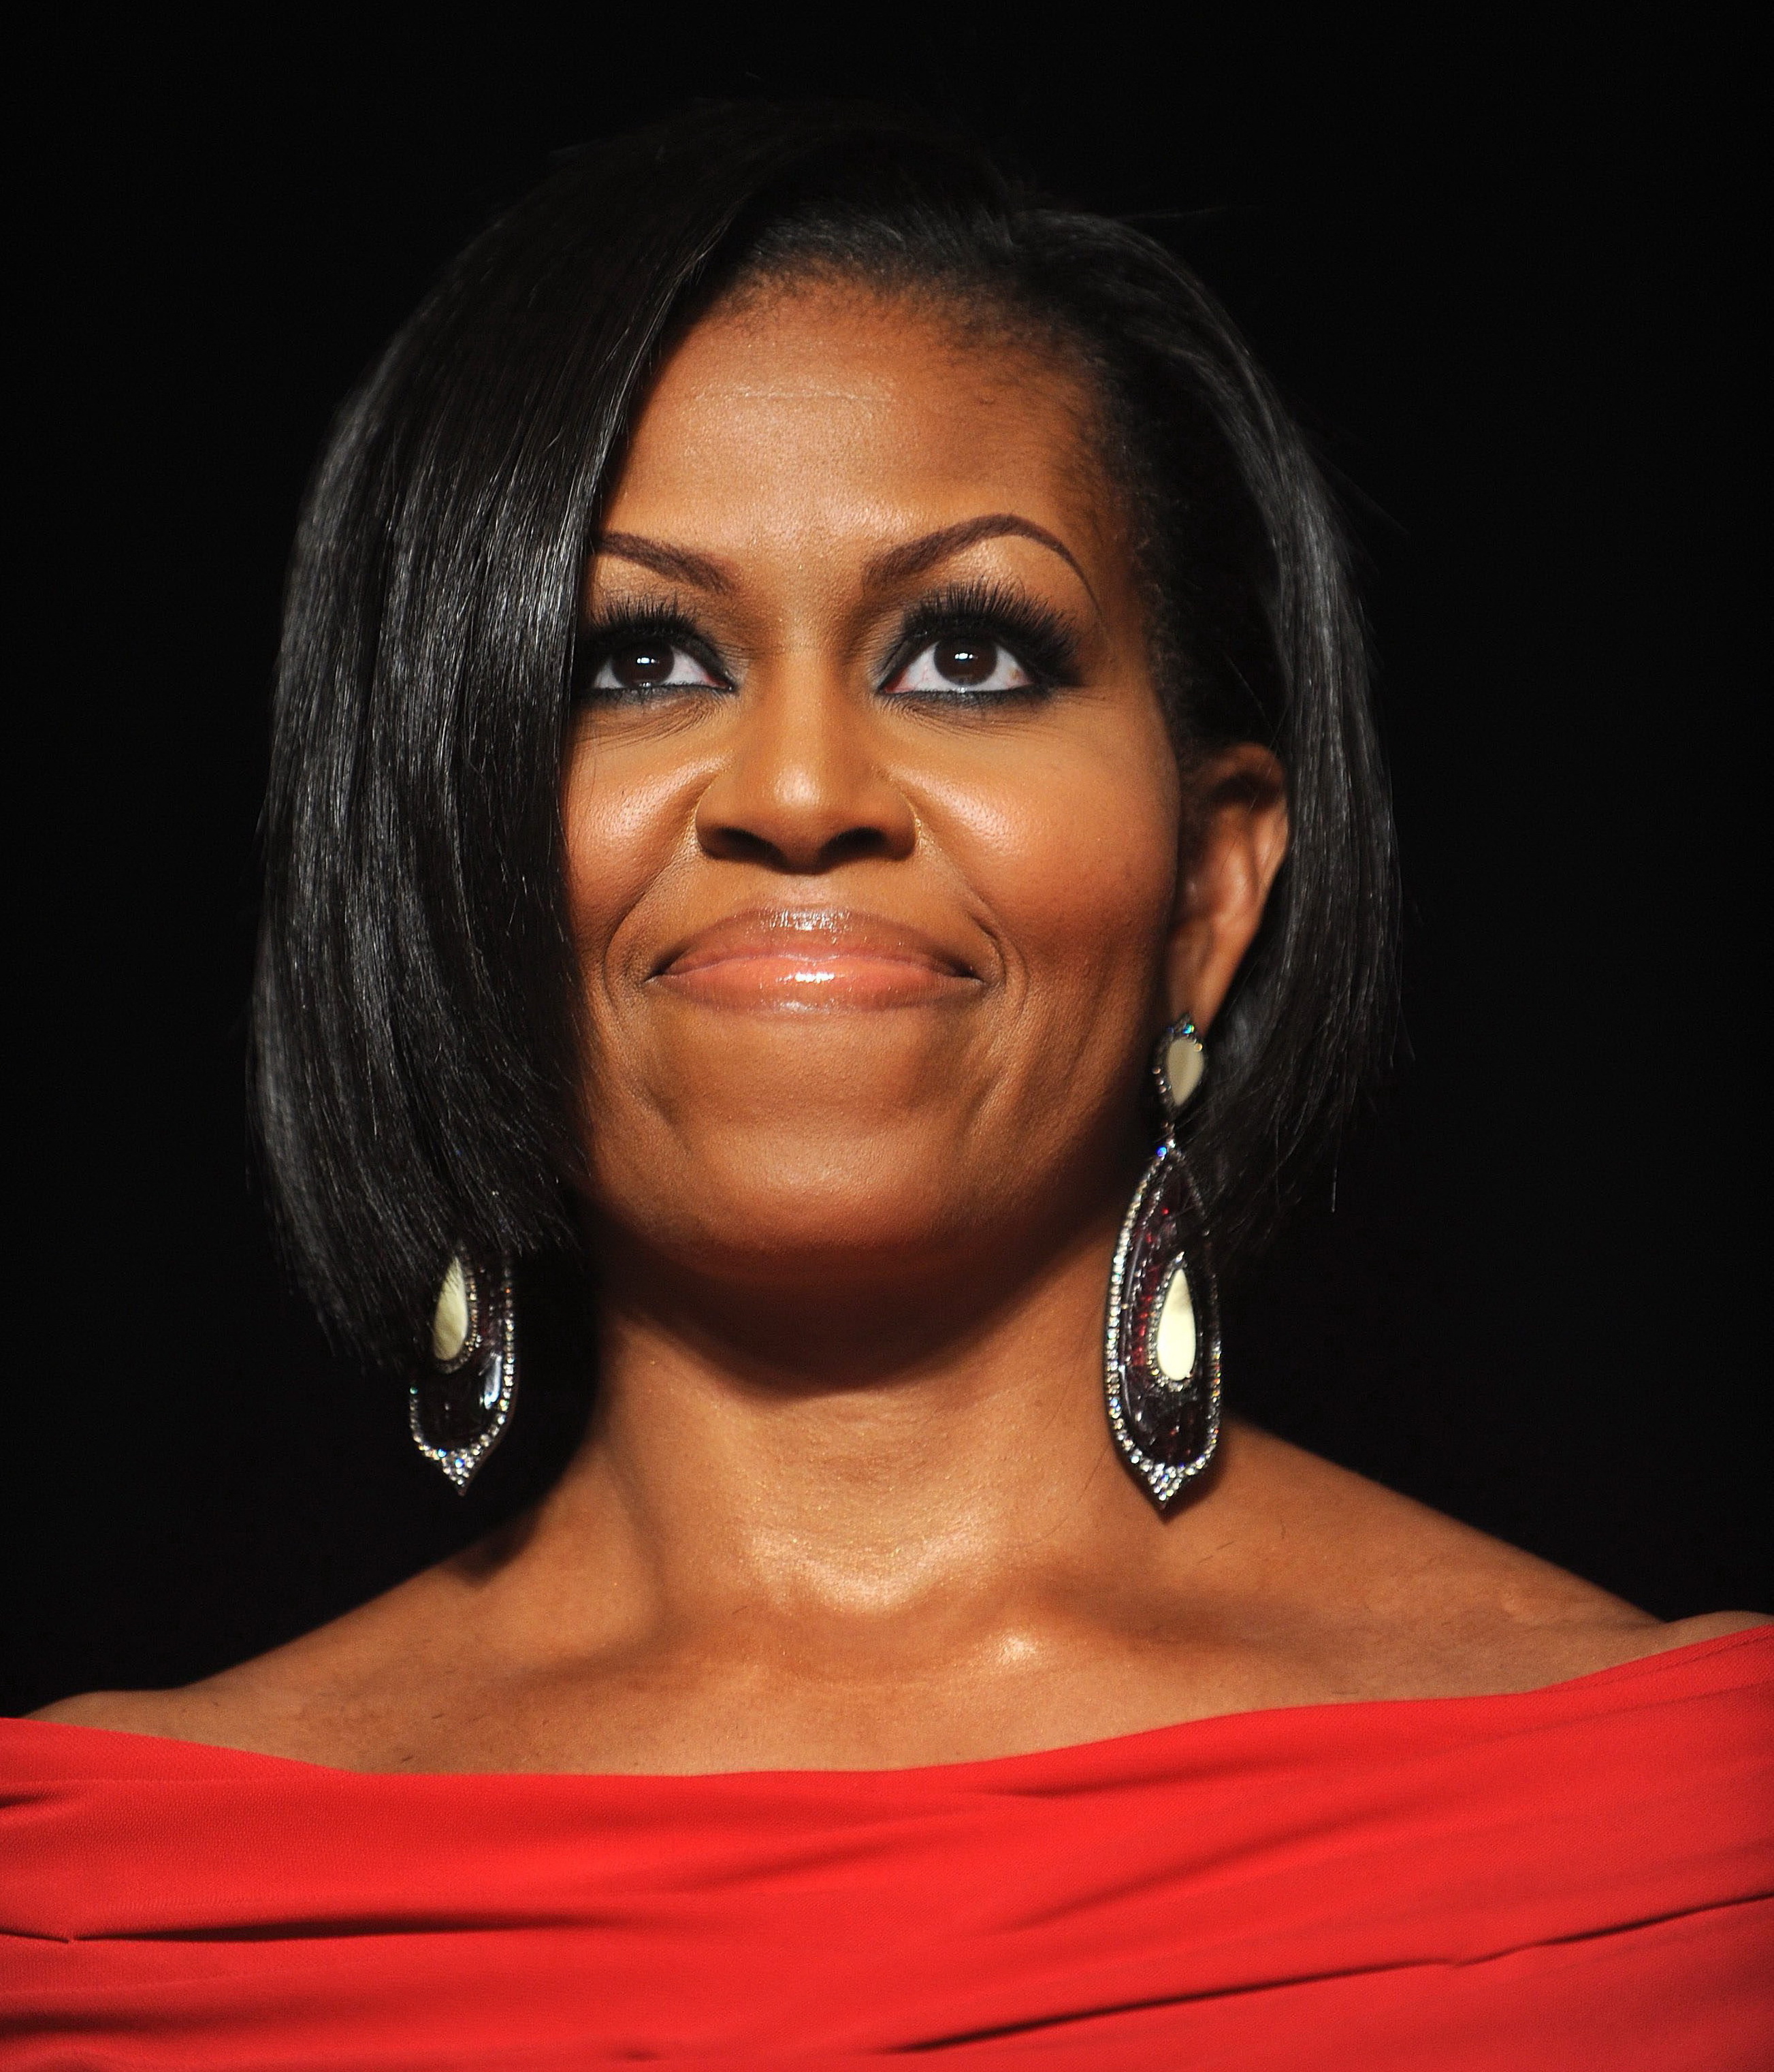 Michelle Obama Wallpaper - WallpaperSafari2606 x 3043